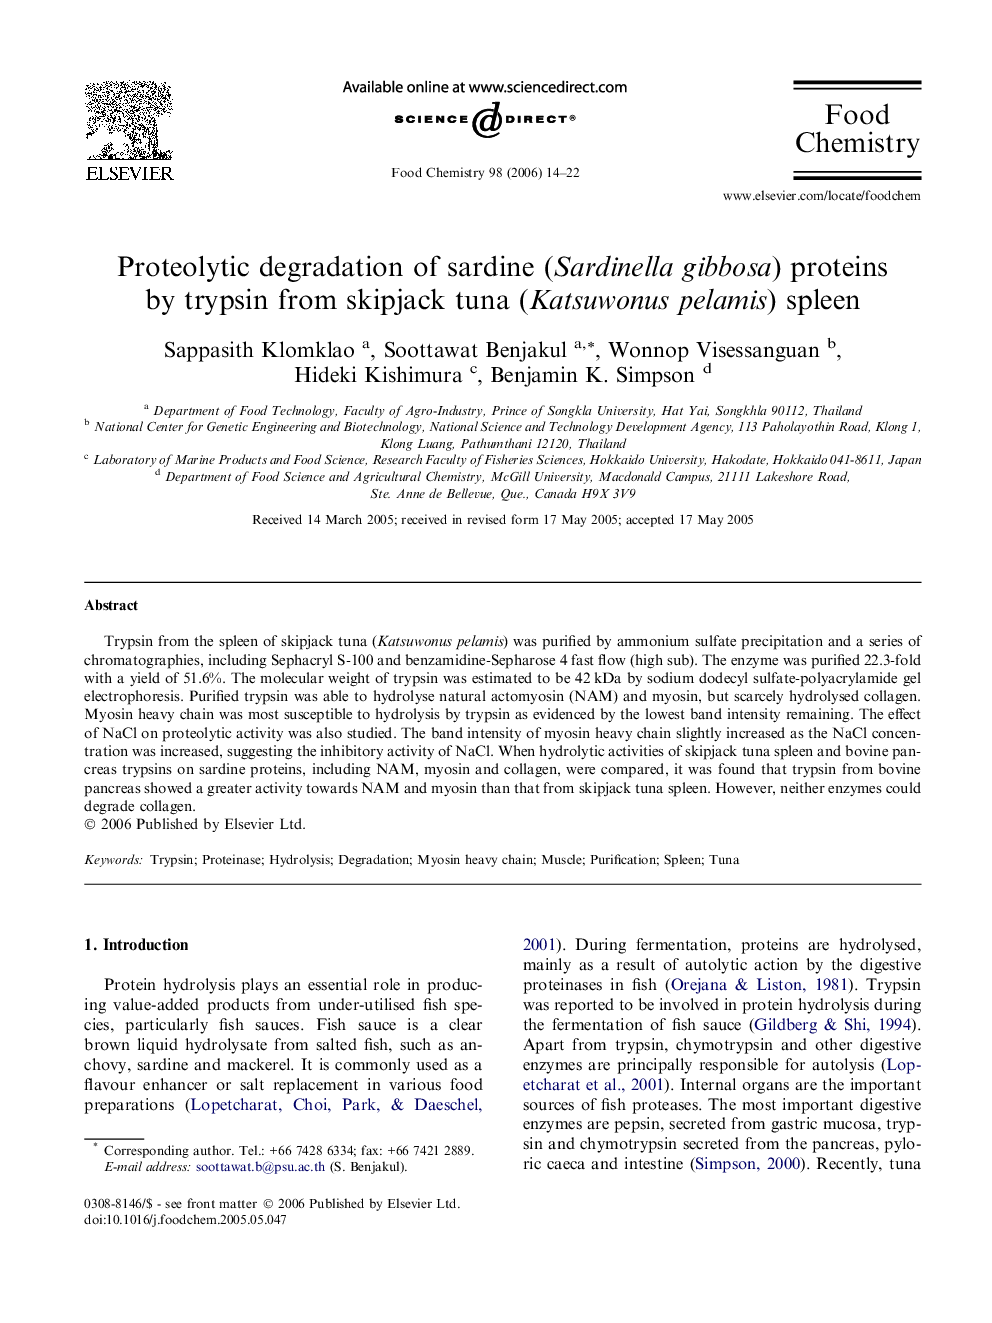 Proteolytic degradation of sardine (Sardinella gibbosa) proteins by trypsin from skipjack tuna (Katsuwonus pelamis) spleen